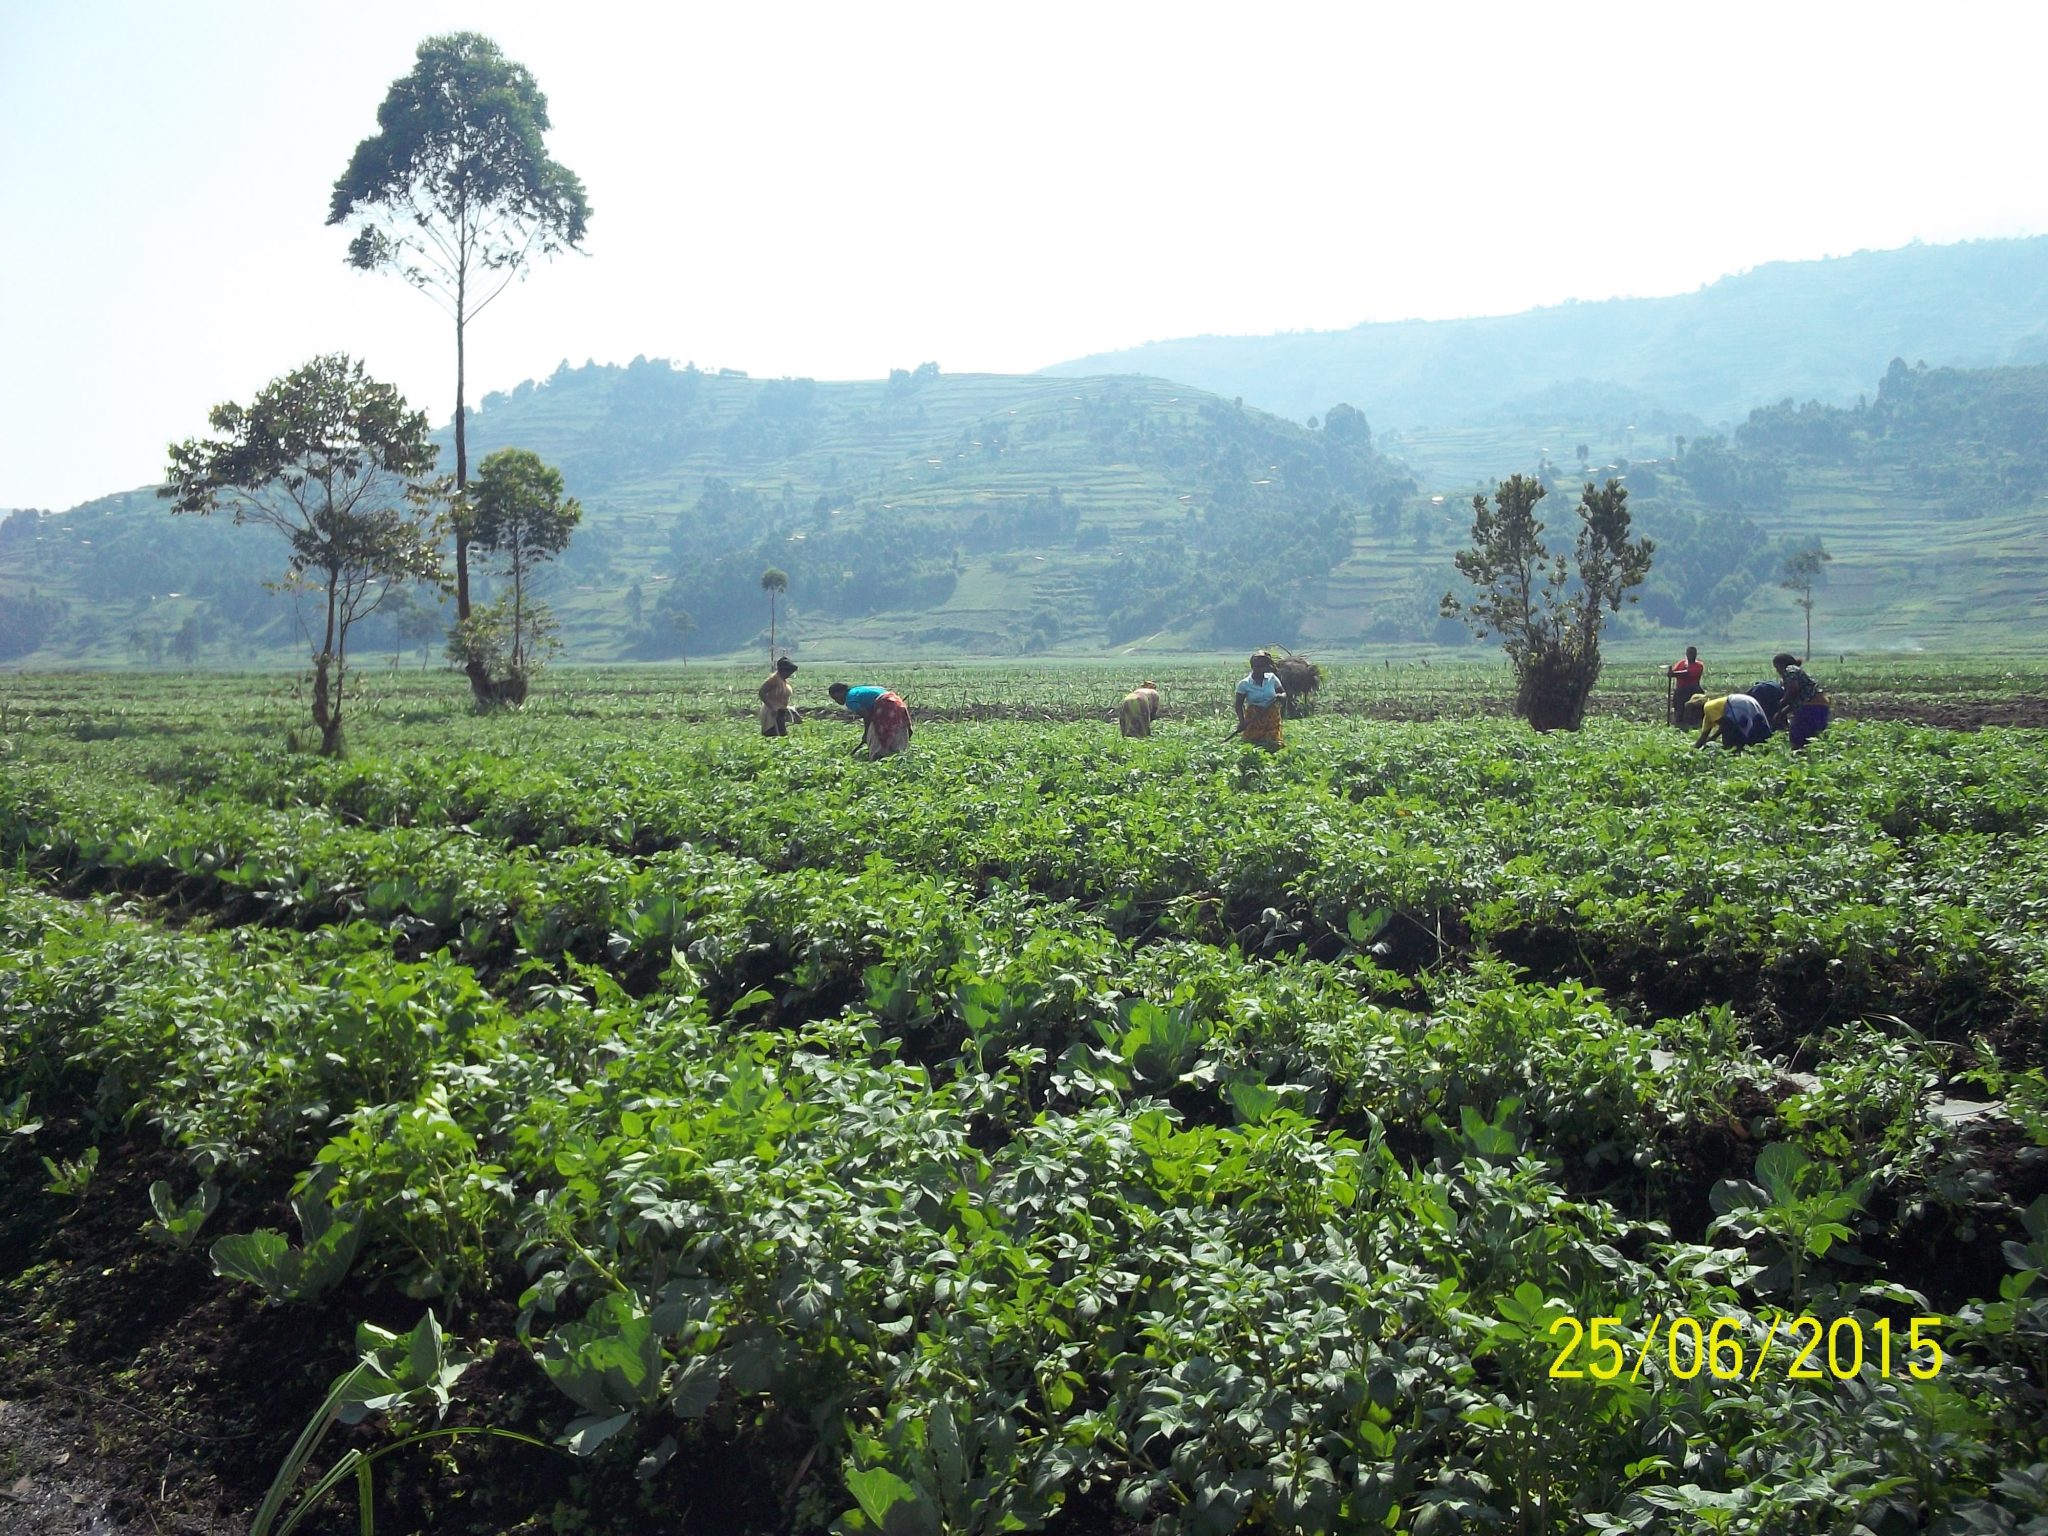 Vast farm land developed from microfinance funding